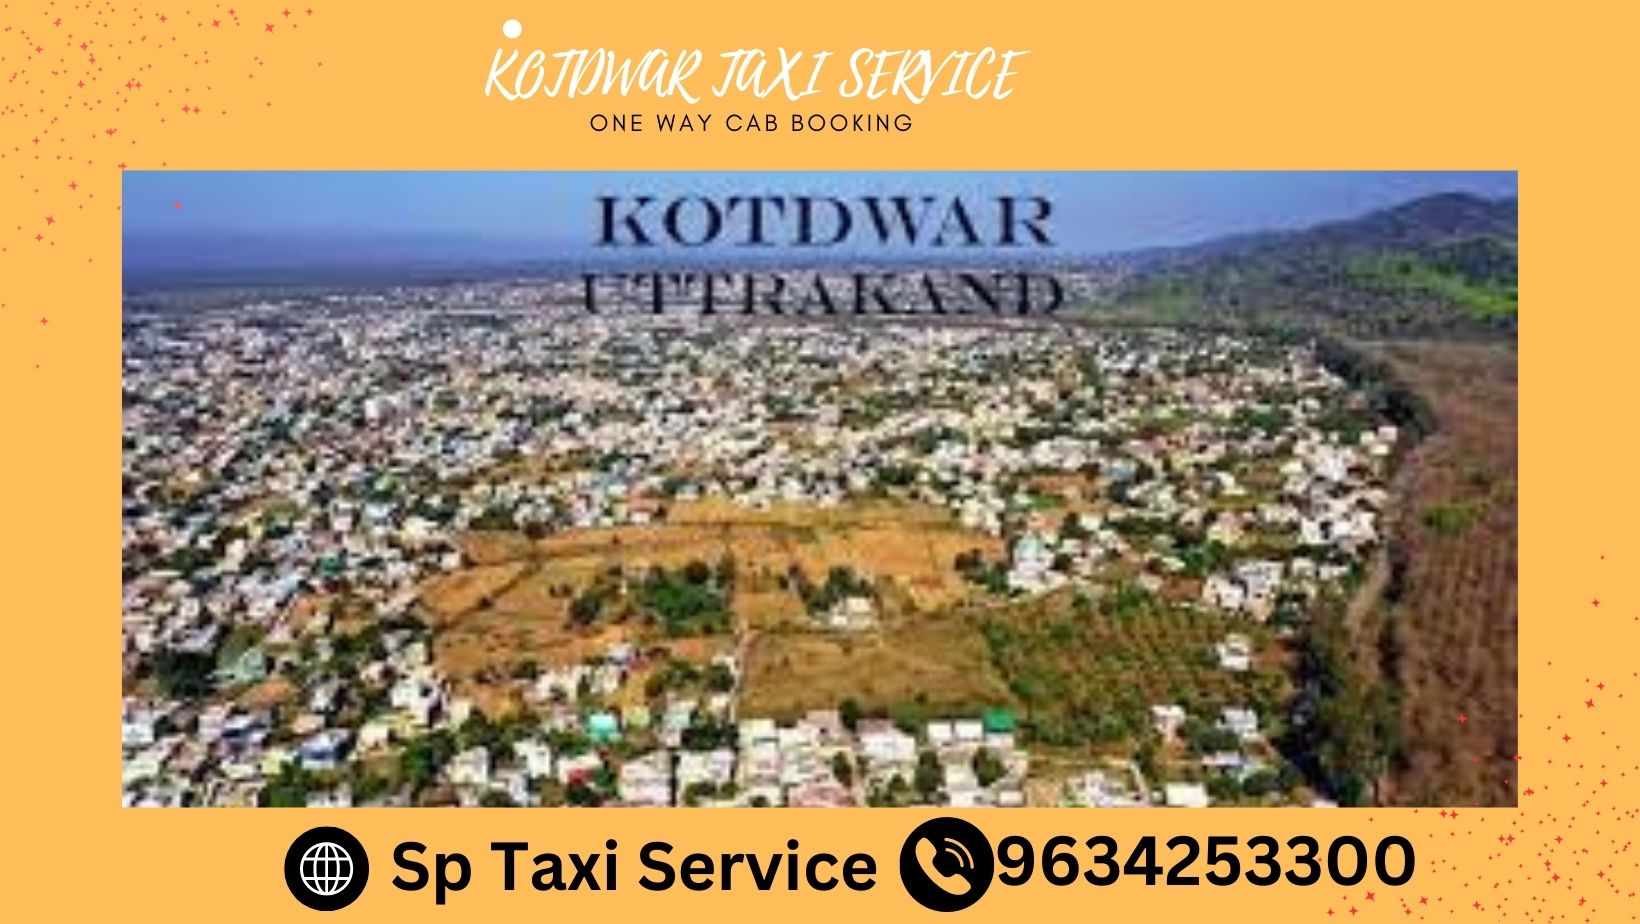 Kotdwar to Noida Taxi